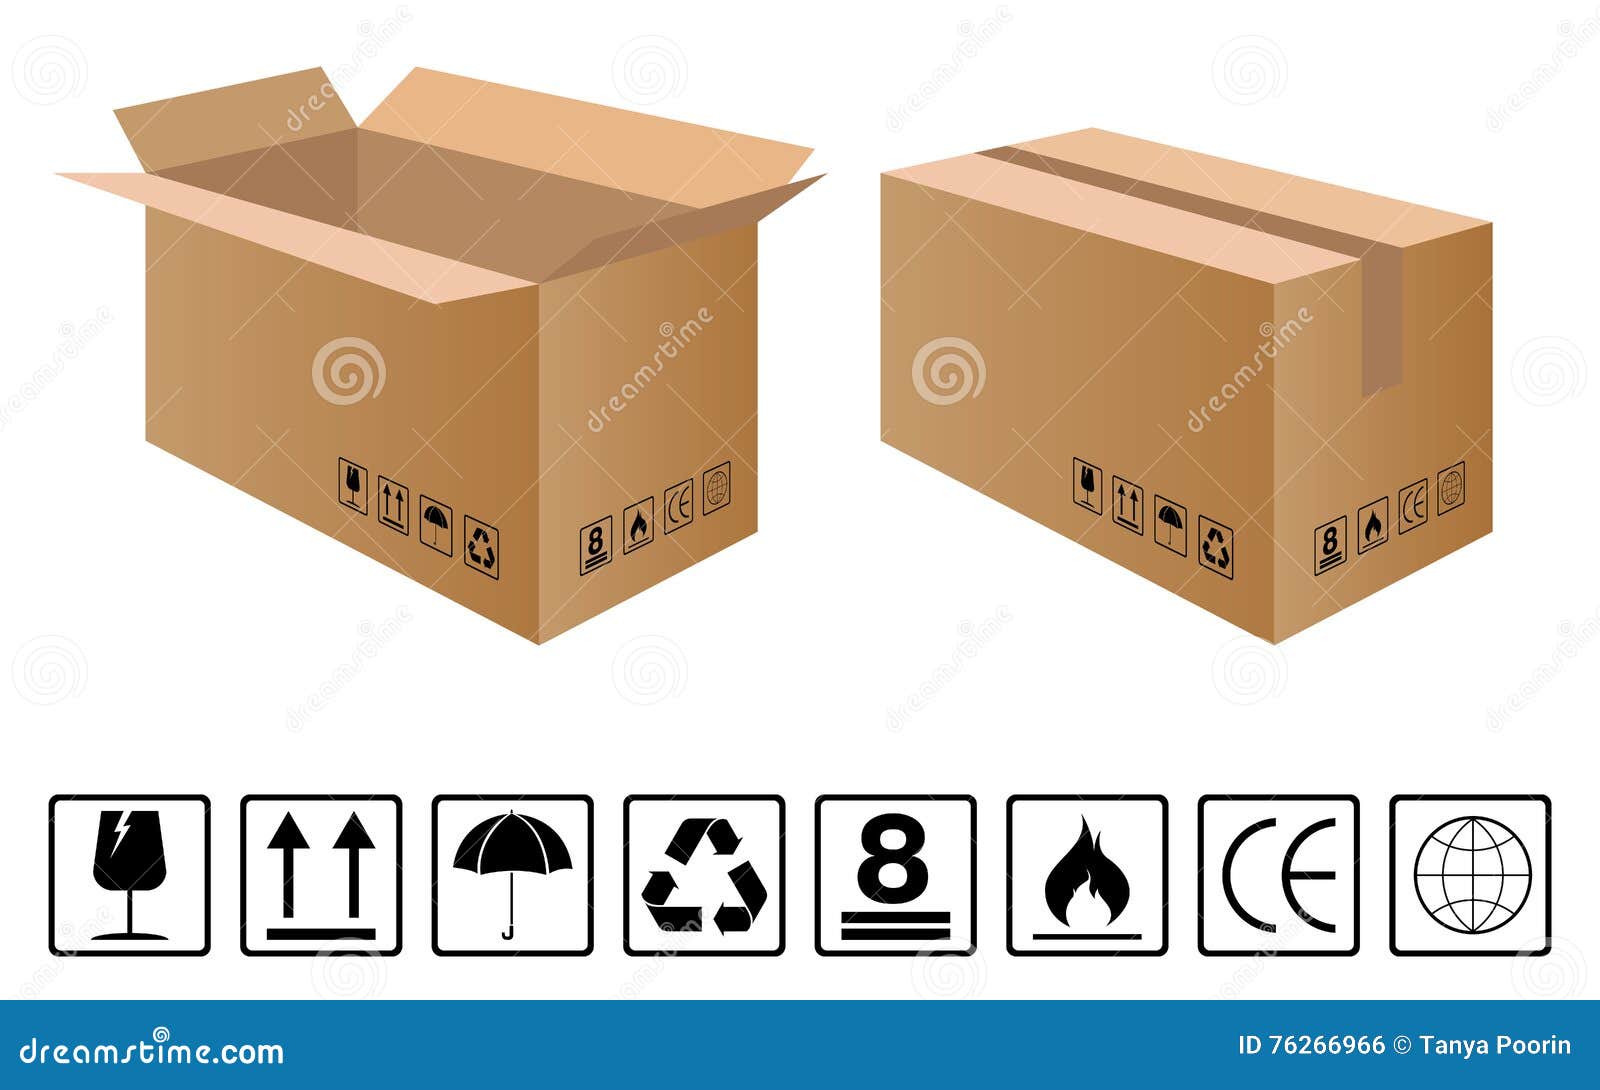 Package signed. Маркировка на коробках. Маркировка на картонных коробках. Символы на картонных коробках. Значки на коробке.